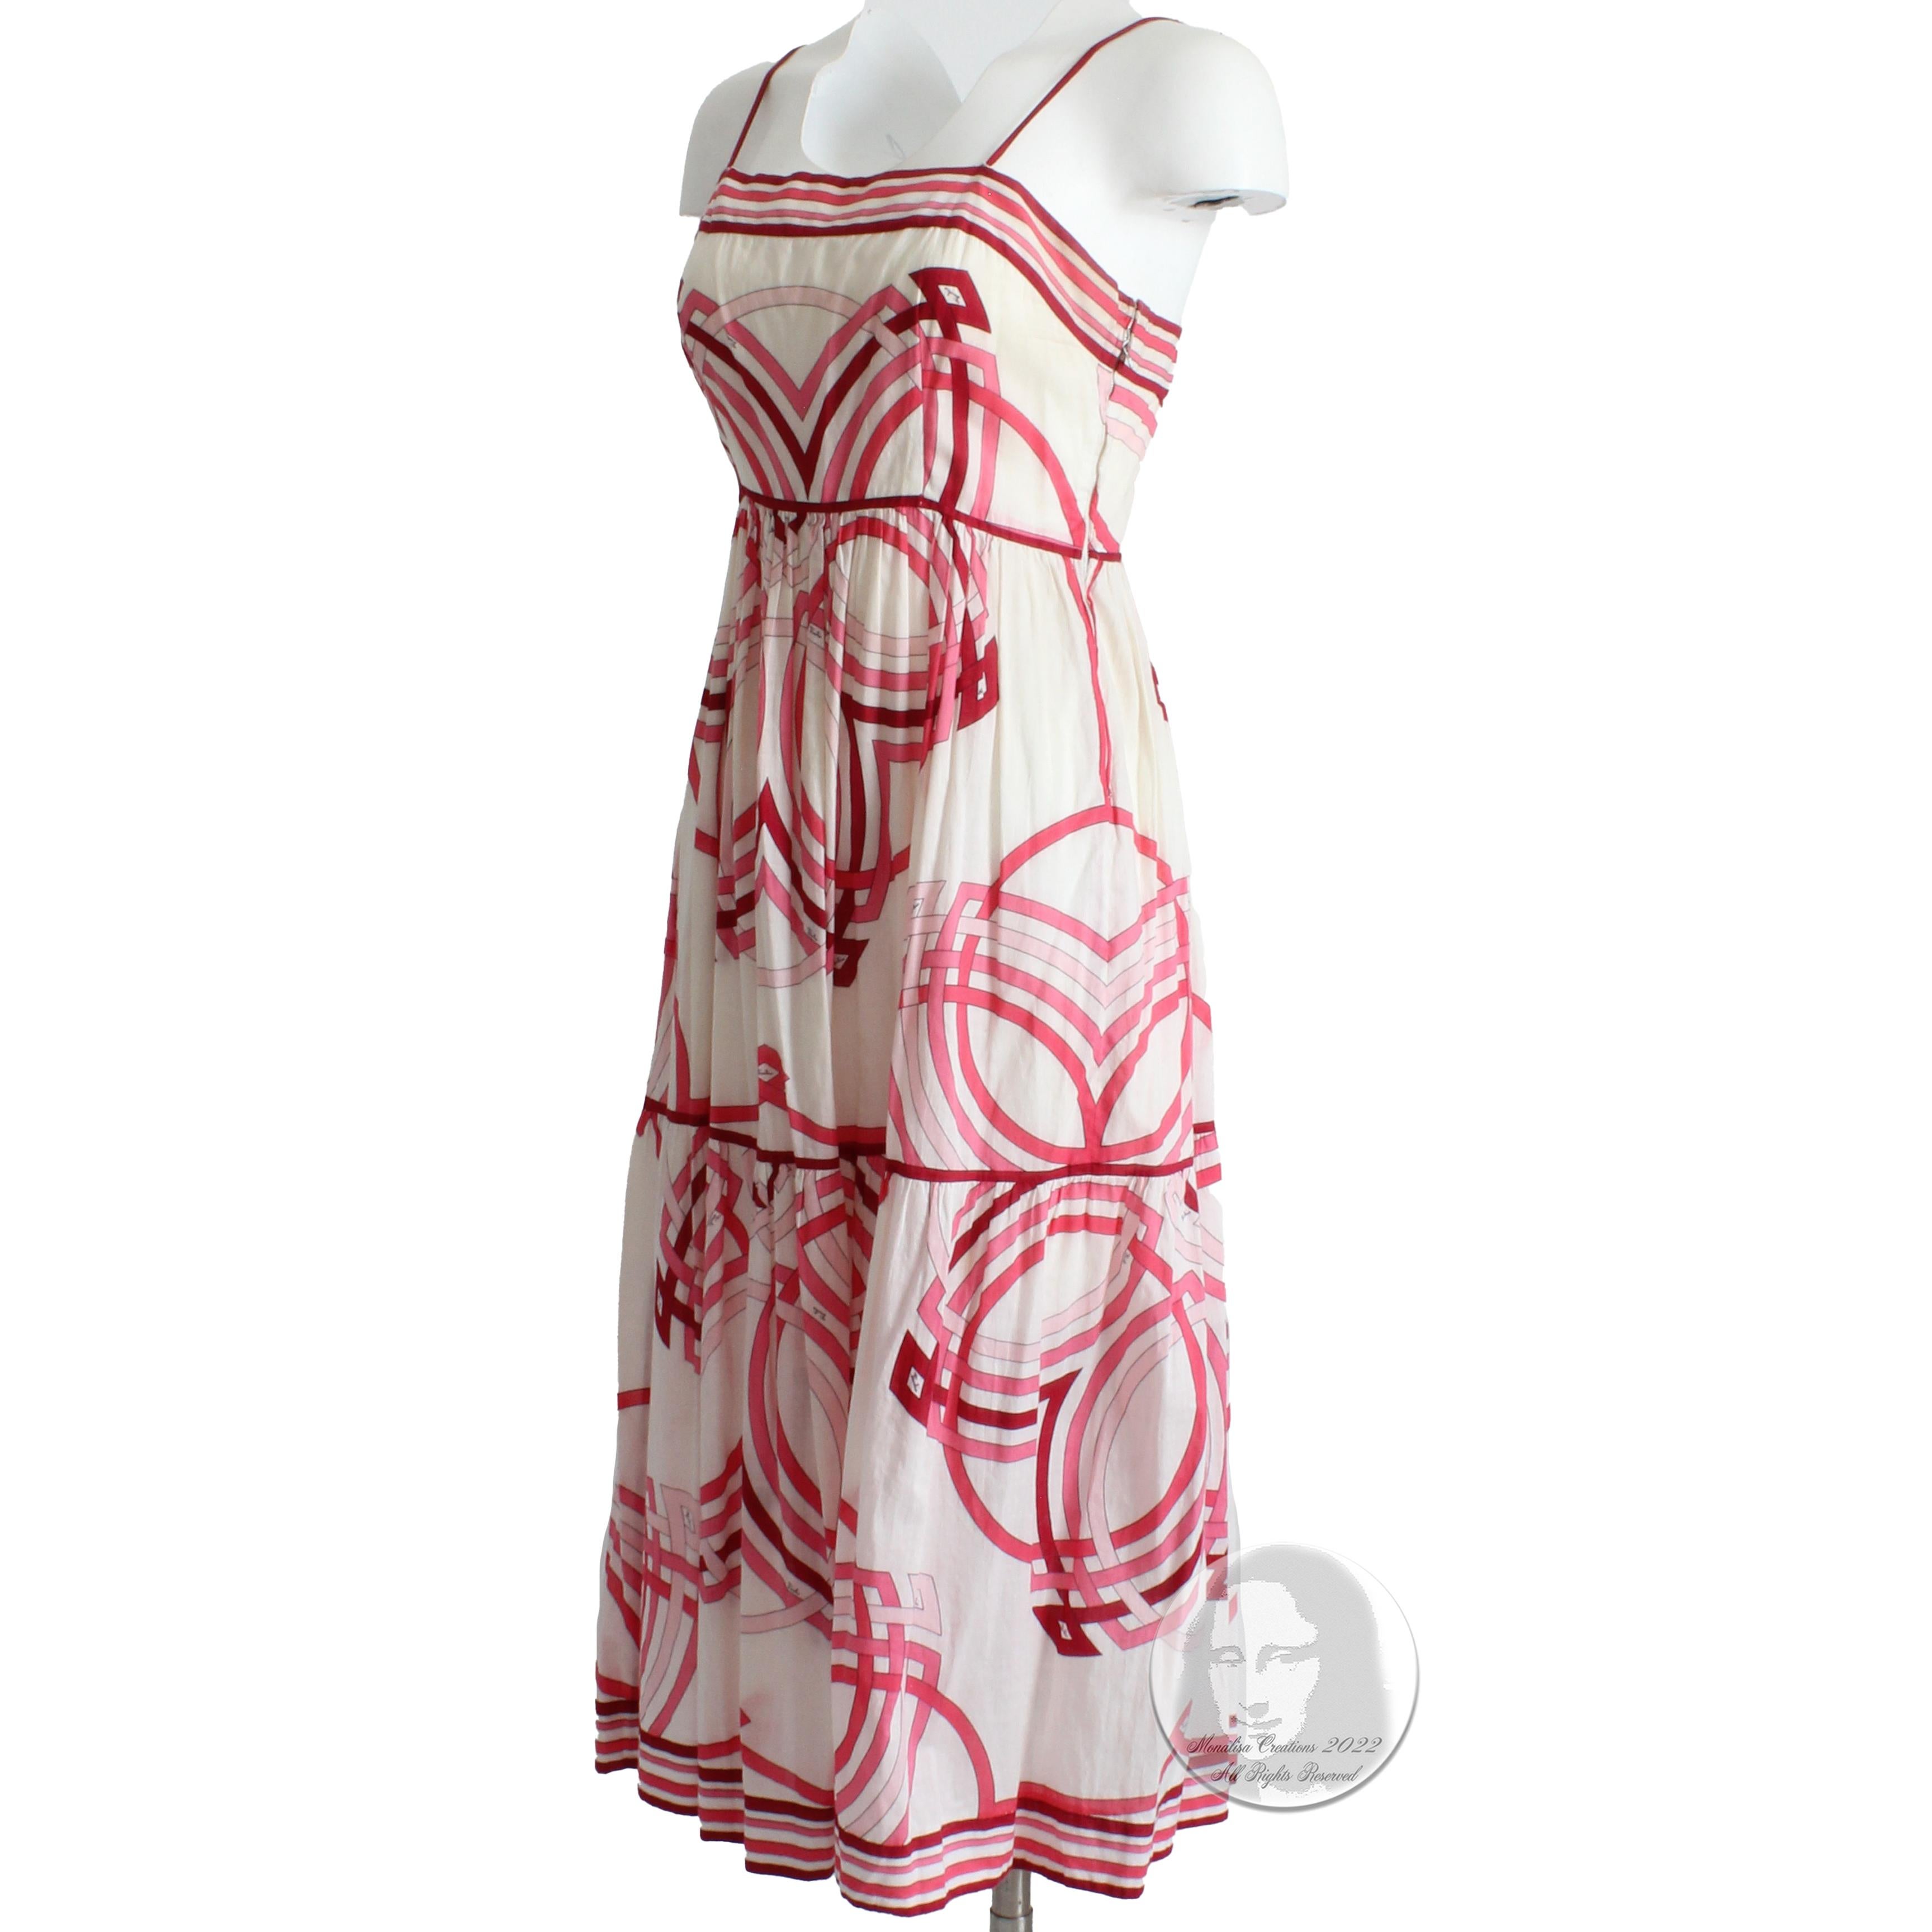 Women's or Men's Emilio Pucci Dress Sundress Pink Abstract Print Cotton Spaghetti Strap 70s 